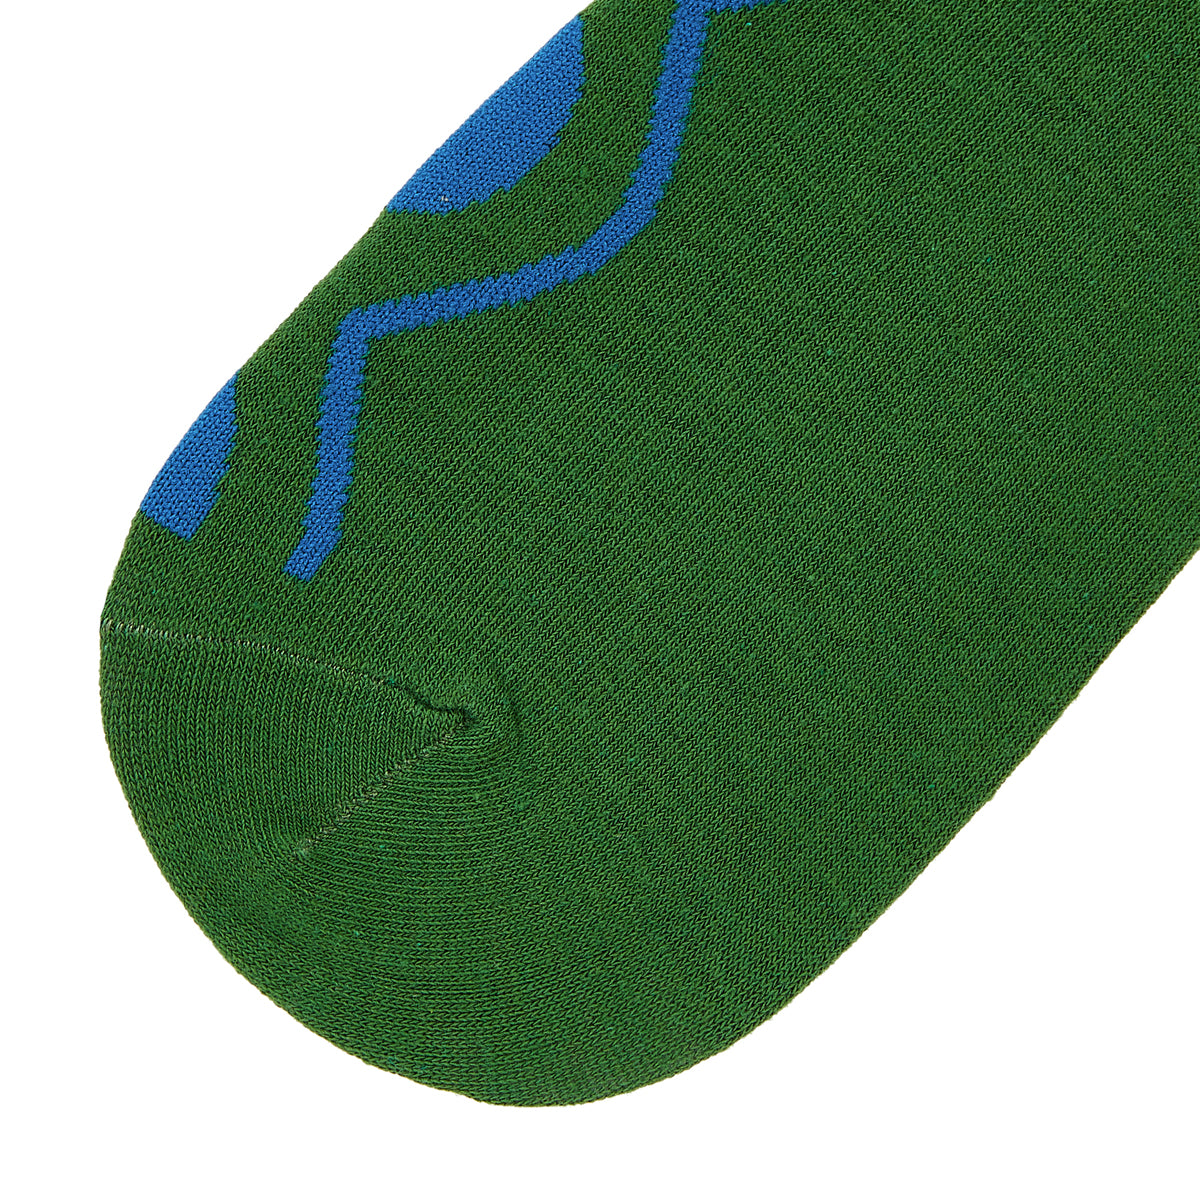 Crocodile Printed Crew Length Socks - IDENTITY Apparel Shop